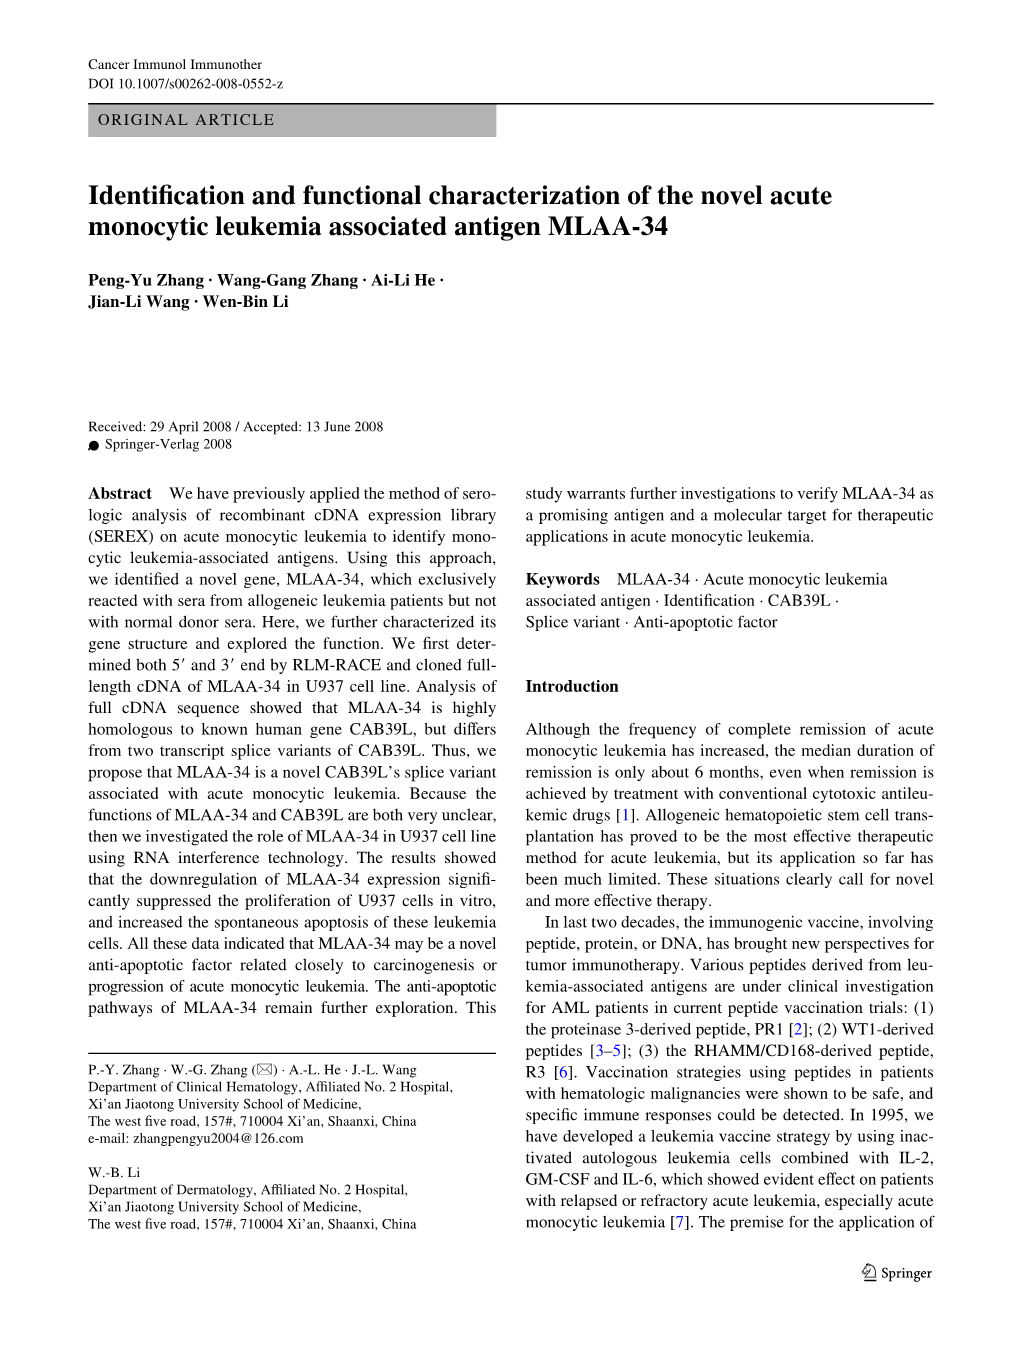 Identiwcation and Functional Characterization of the Novel Acute Monocytic Leukemia Associated Antigen MLAA-34